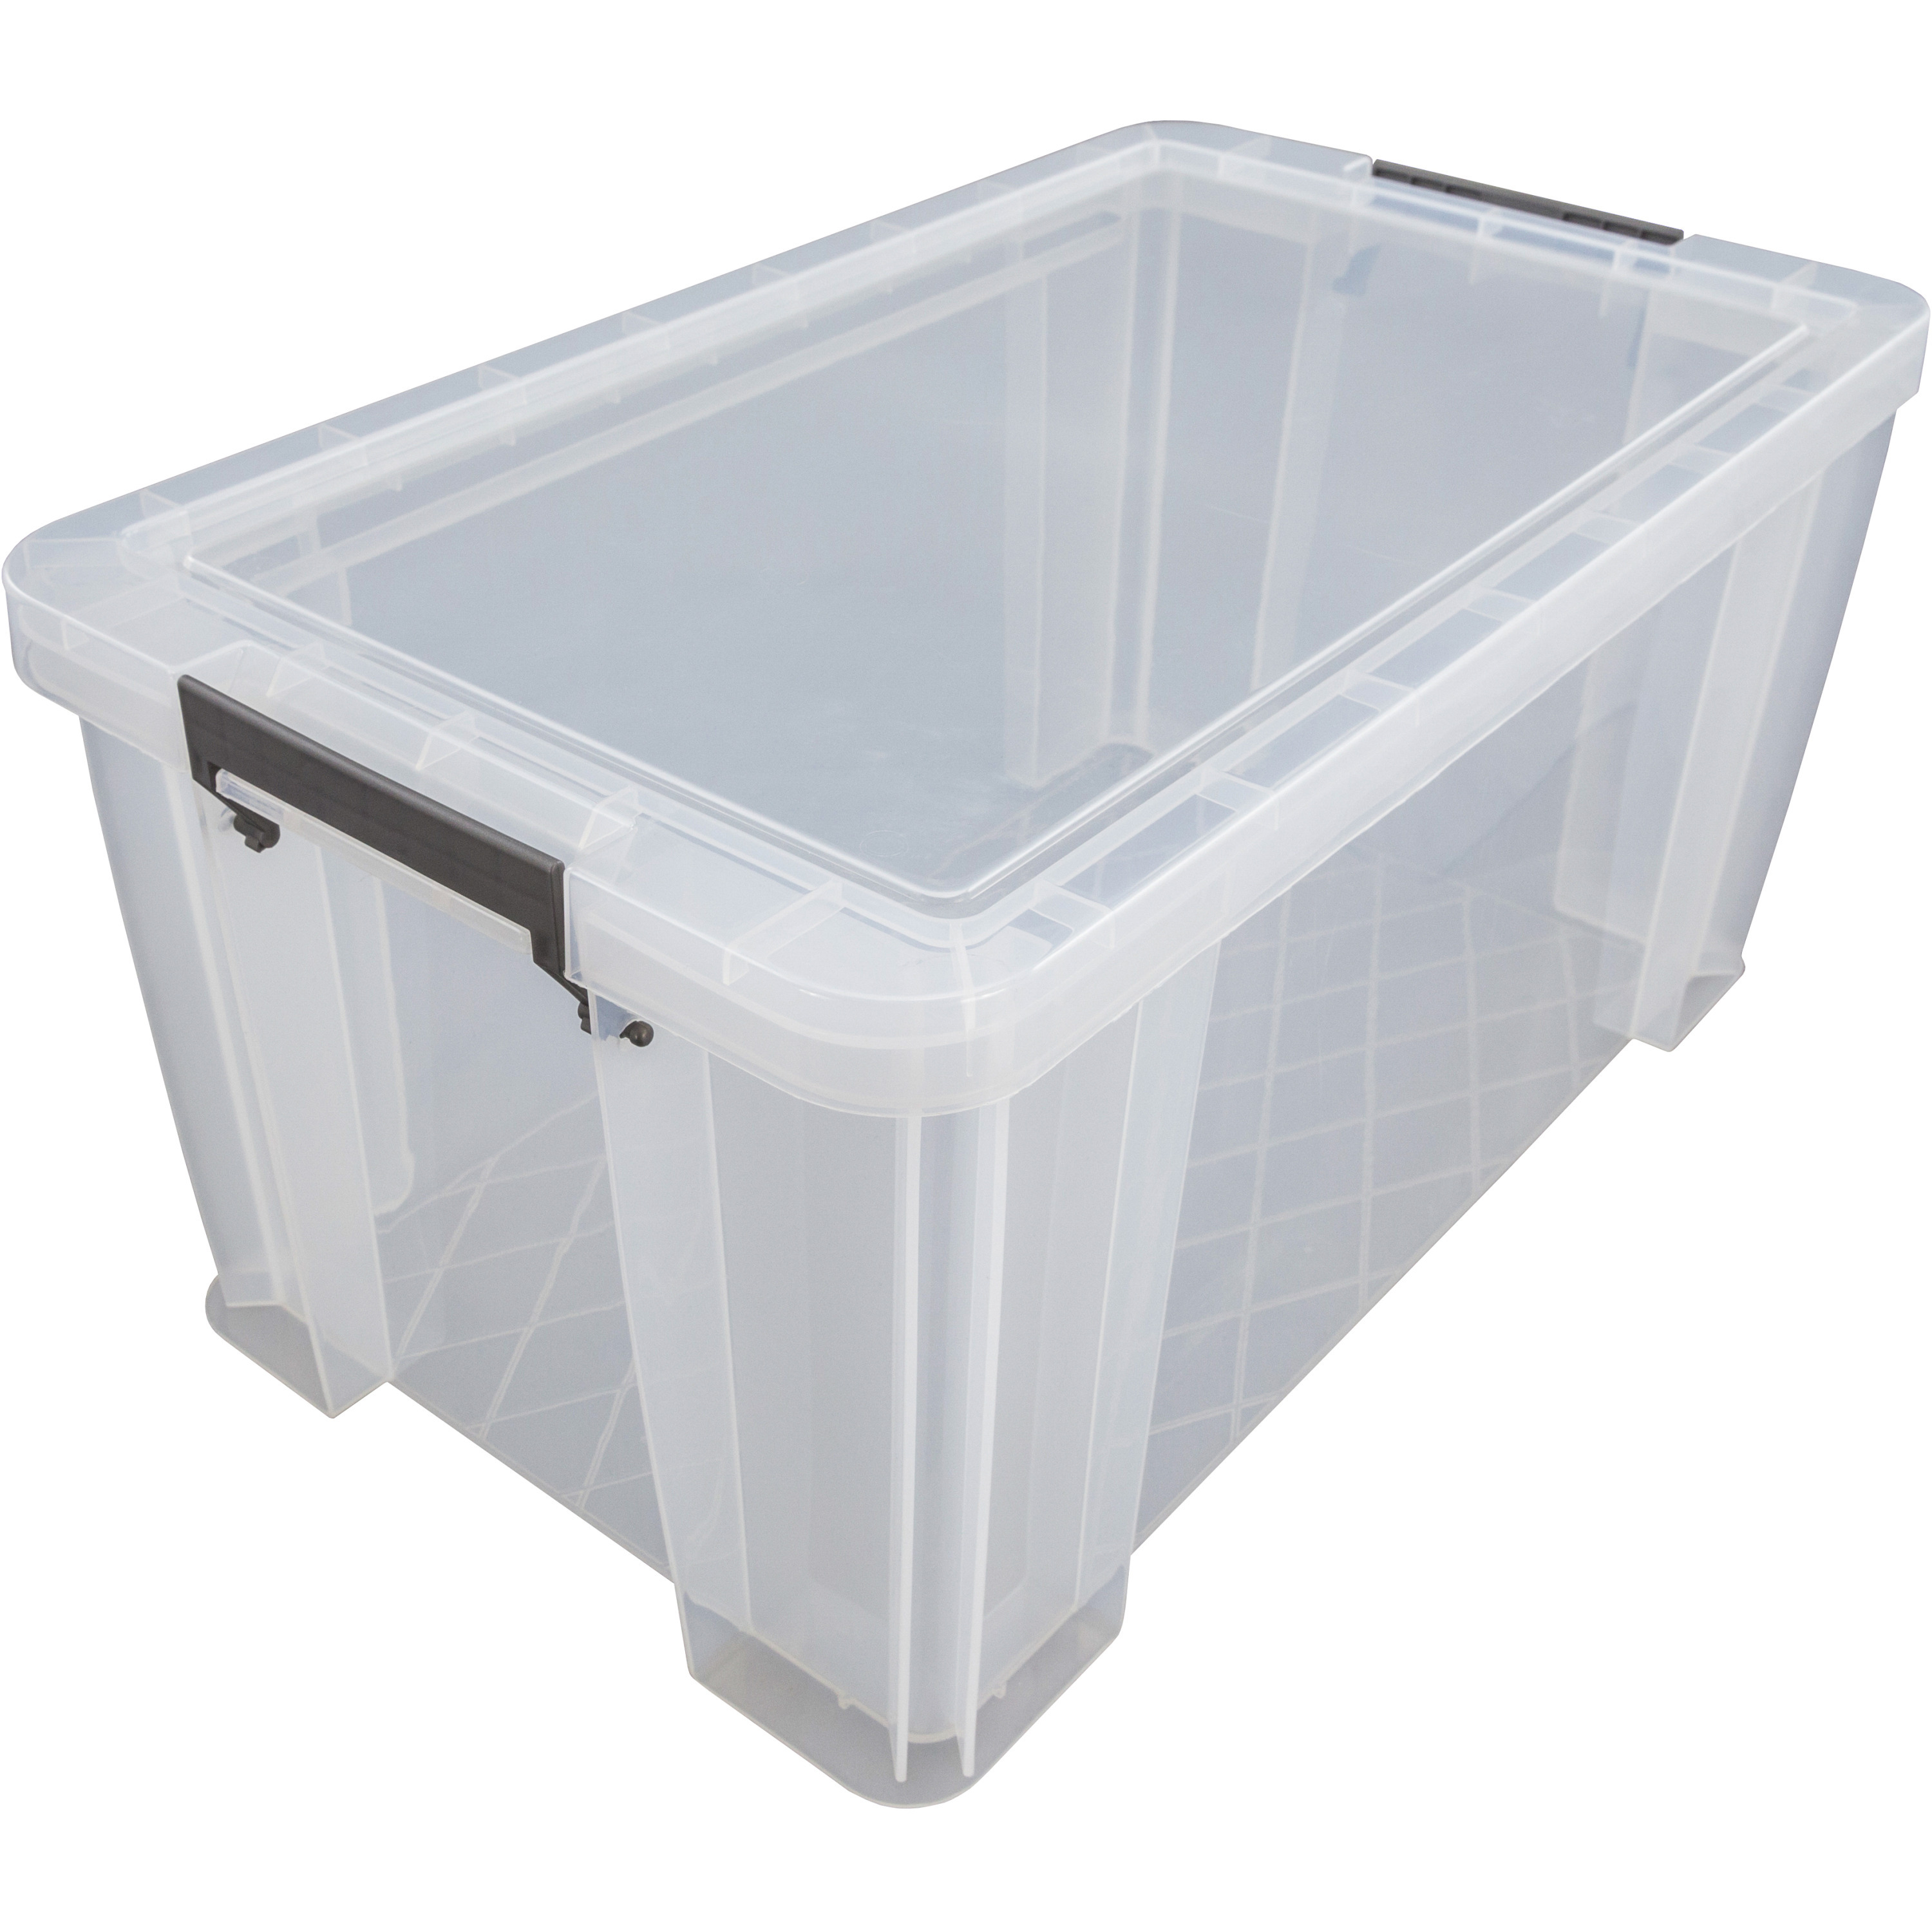 Allstore Opbergbox 54 liter Transparant 66 x 38 x 31 cm